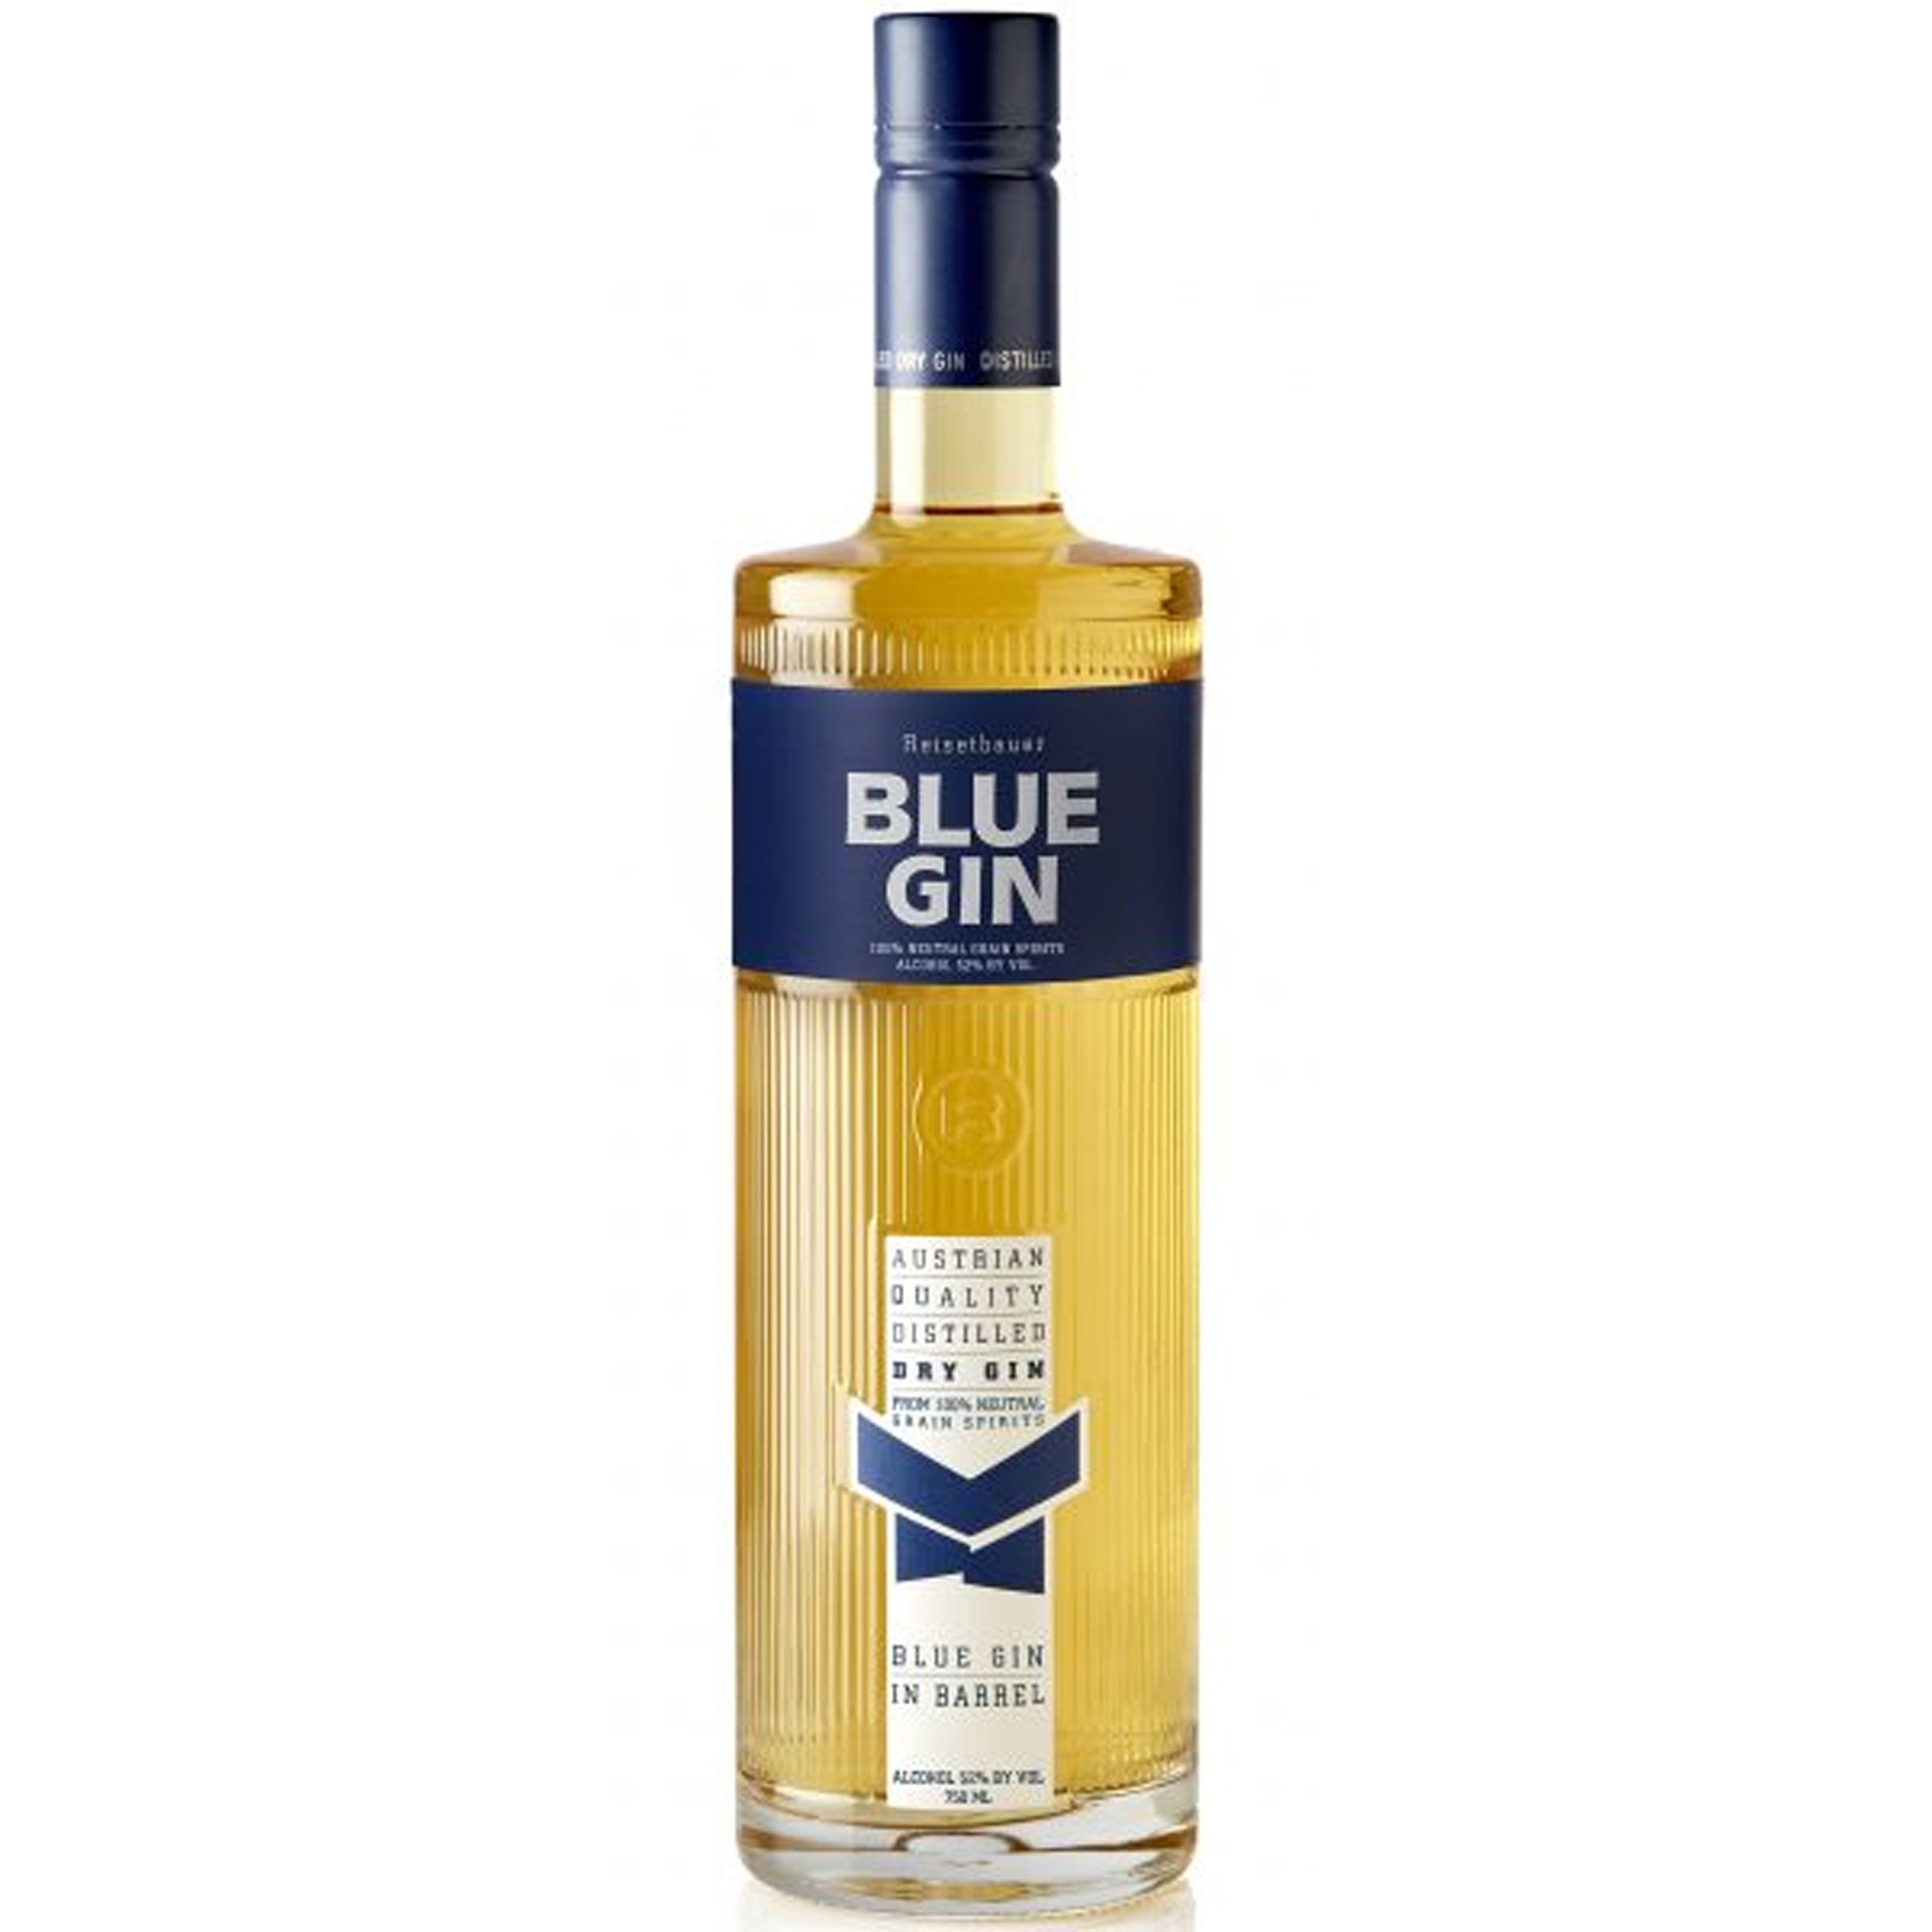 Hans Oak Reisetbauer Chips Liquor in Blue Gin –